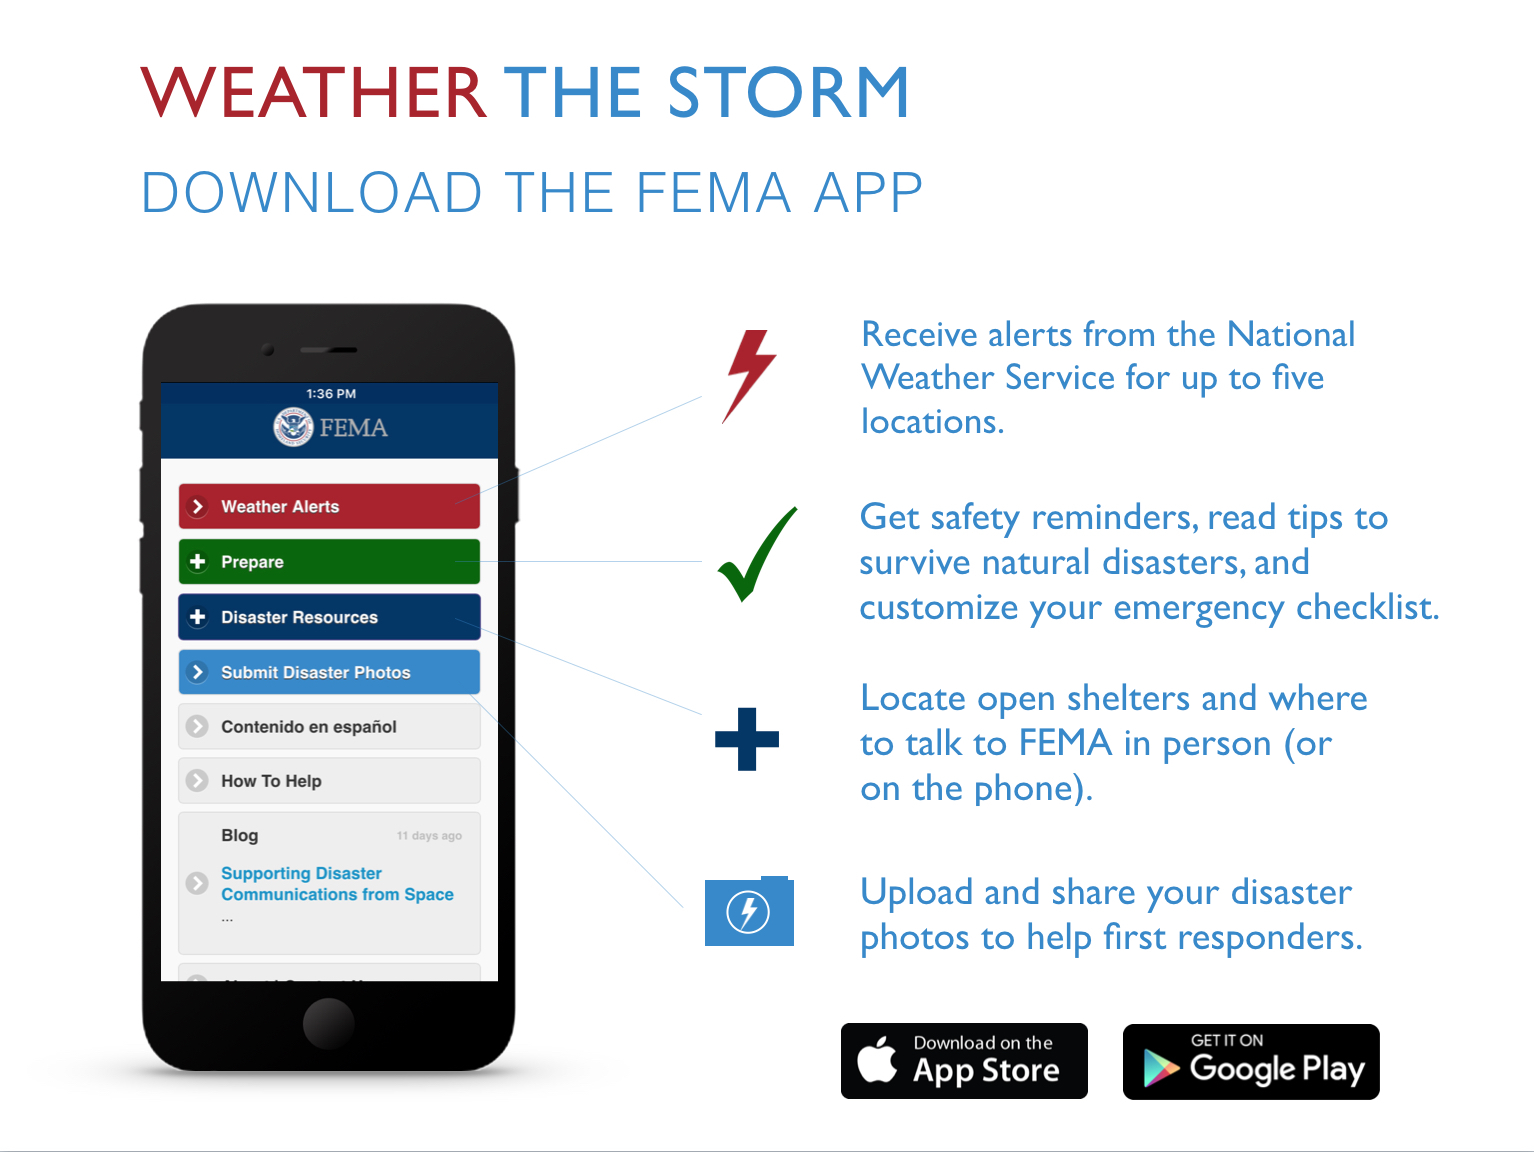 FEMA App Infographic